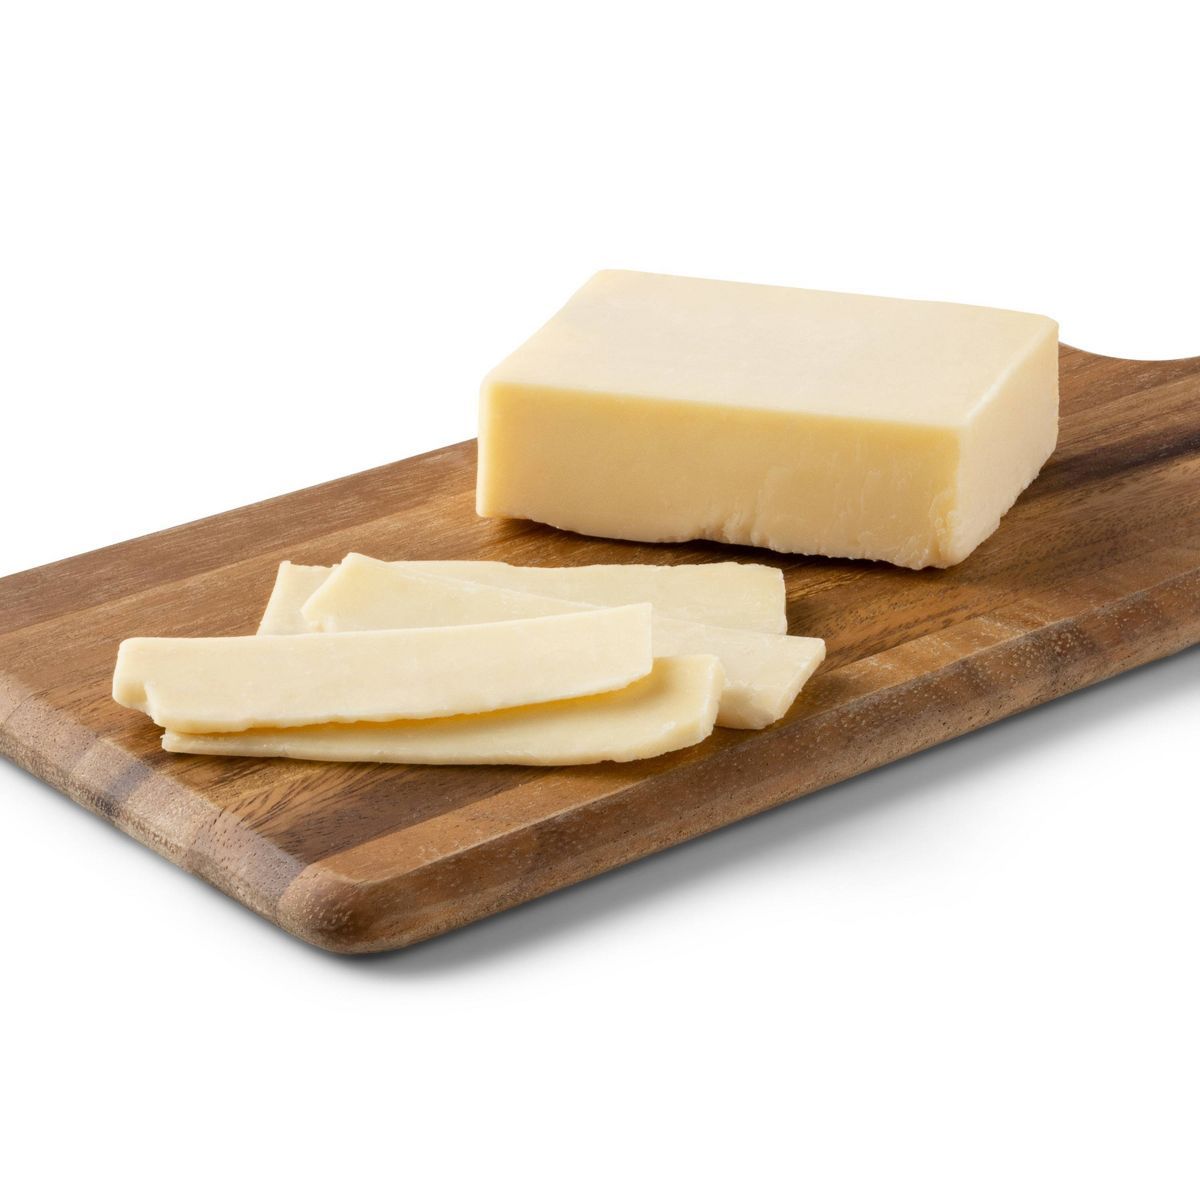 Extra Sharp Cheddar Cheese - 7oz - Good & Gather™ | Target